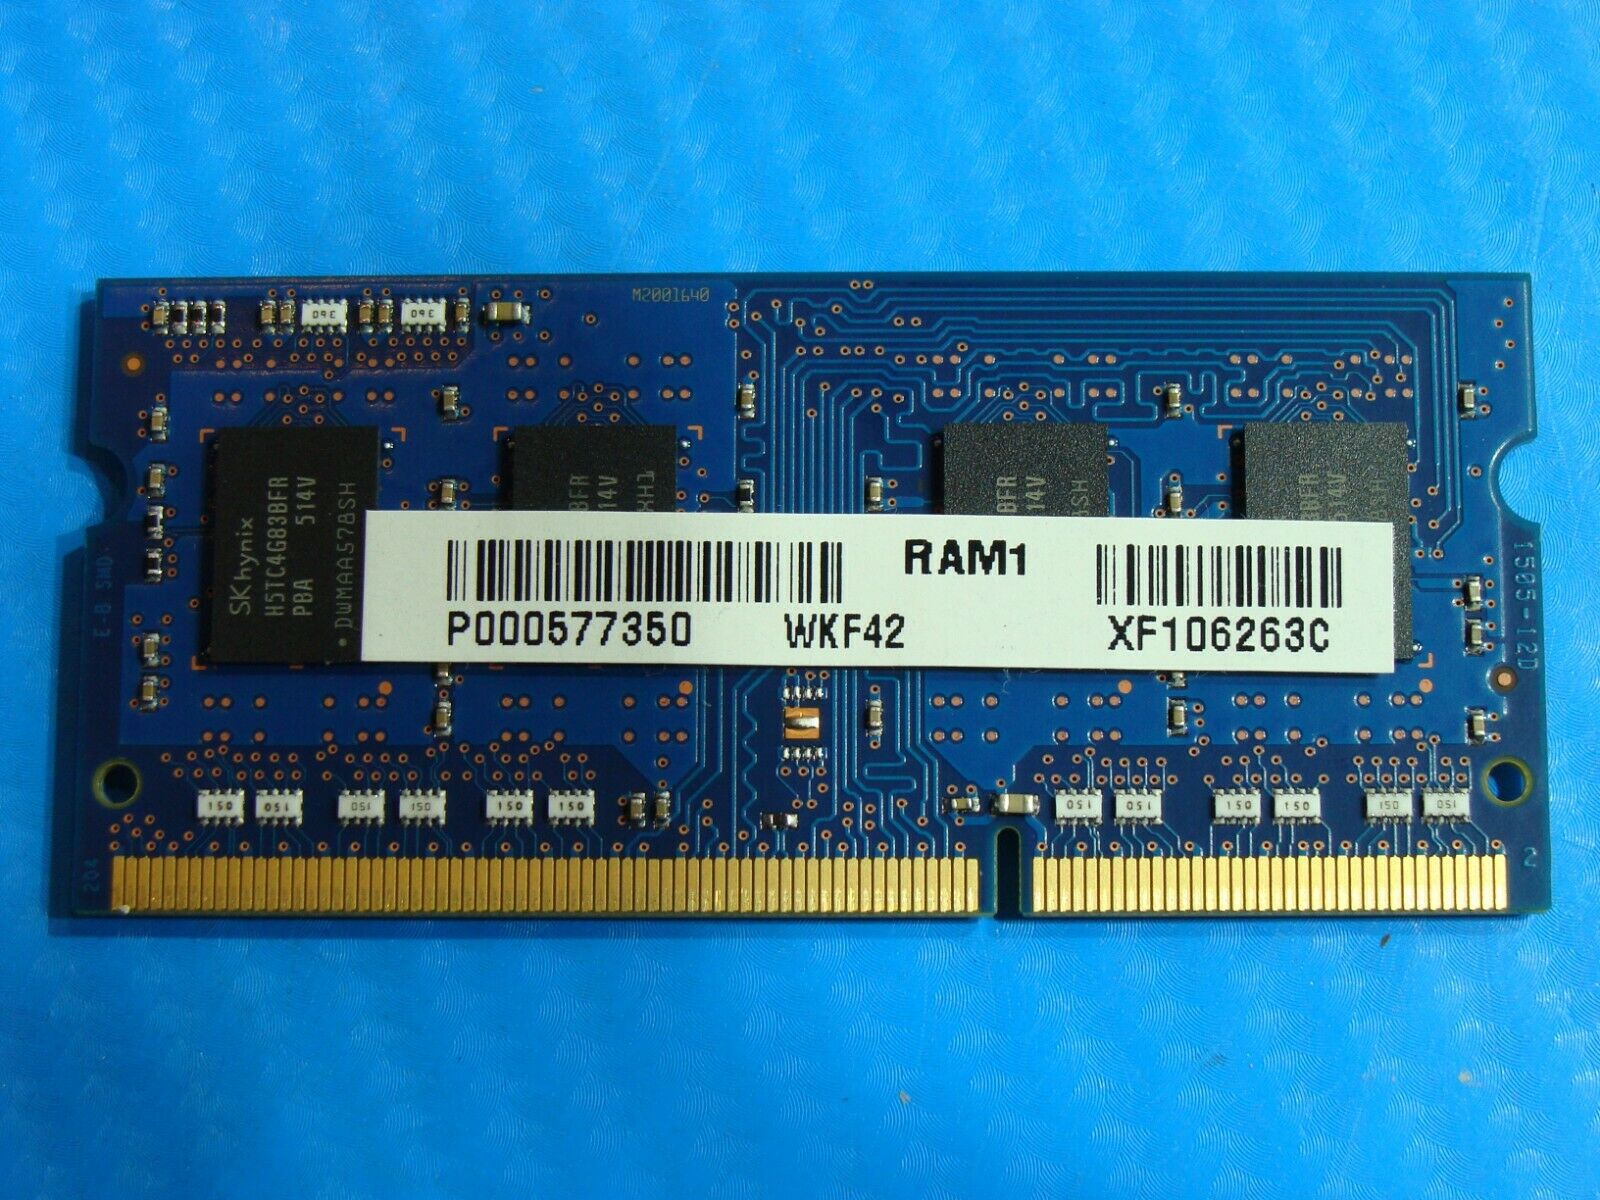 Toshiba C55t-C5300 SK hynix SO-DIMM RAM Memory 4GB PC3L-12800S HMT451S6BFR8A-PB - Laptop Parts - Buy Authentic Computer Parts - Top Seller Ebay